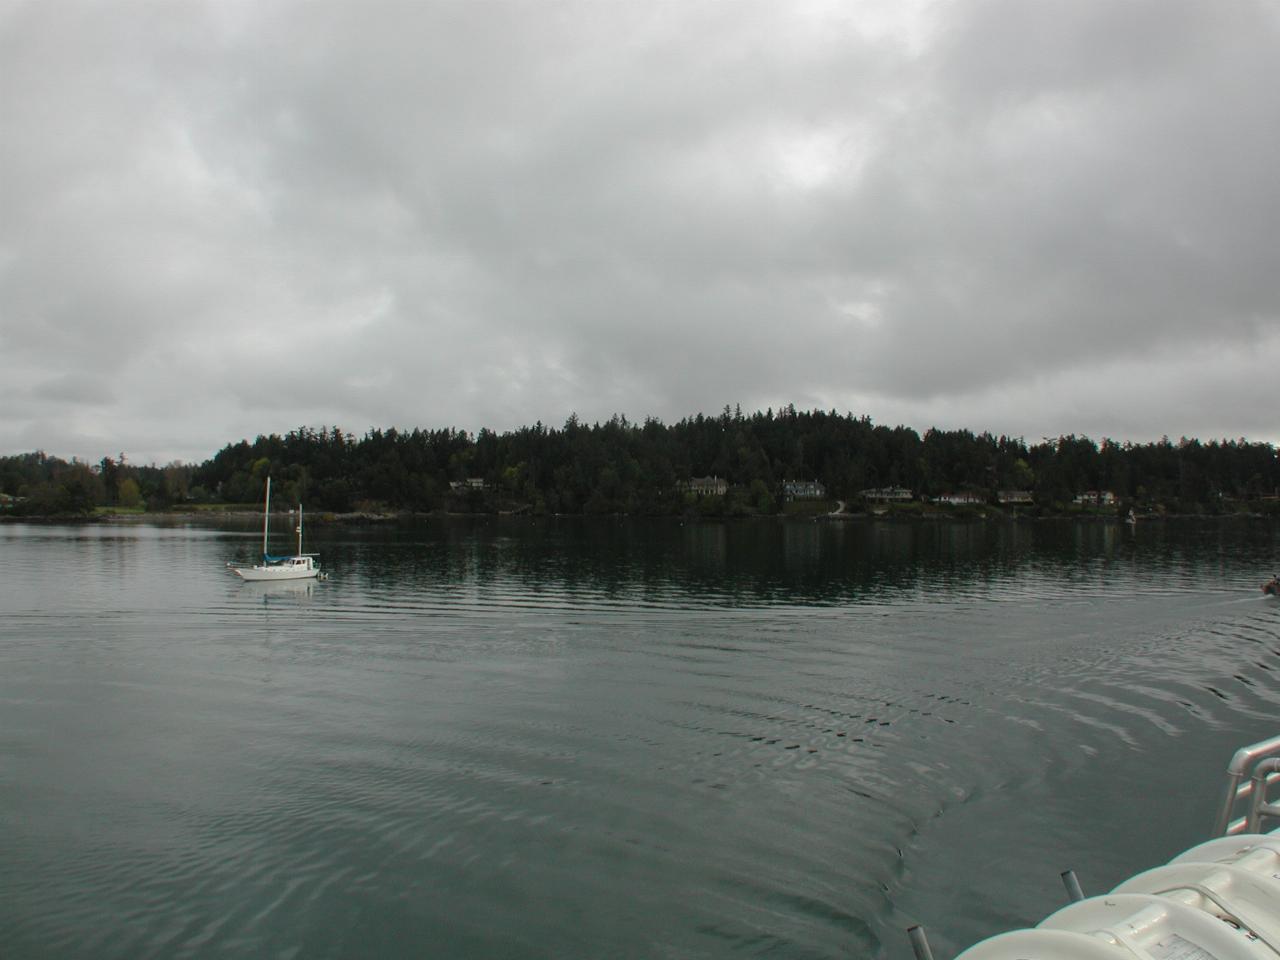 Views around Sidney BC's marina as we depart